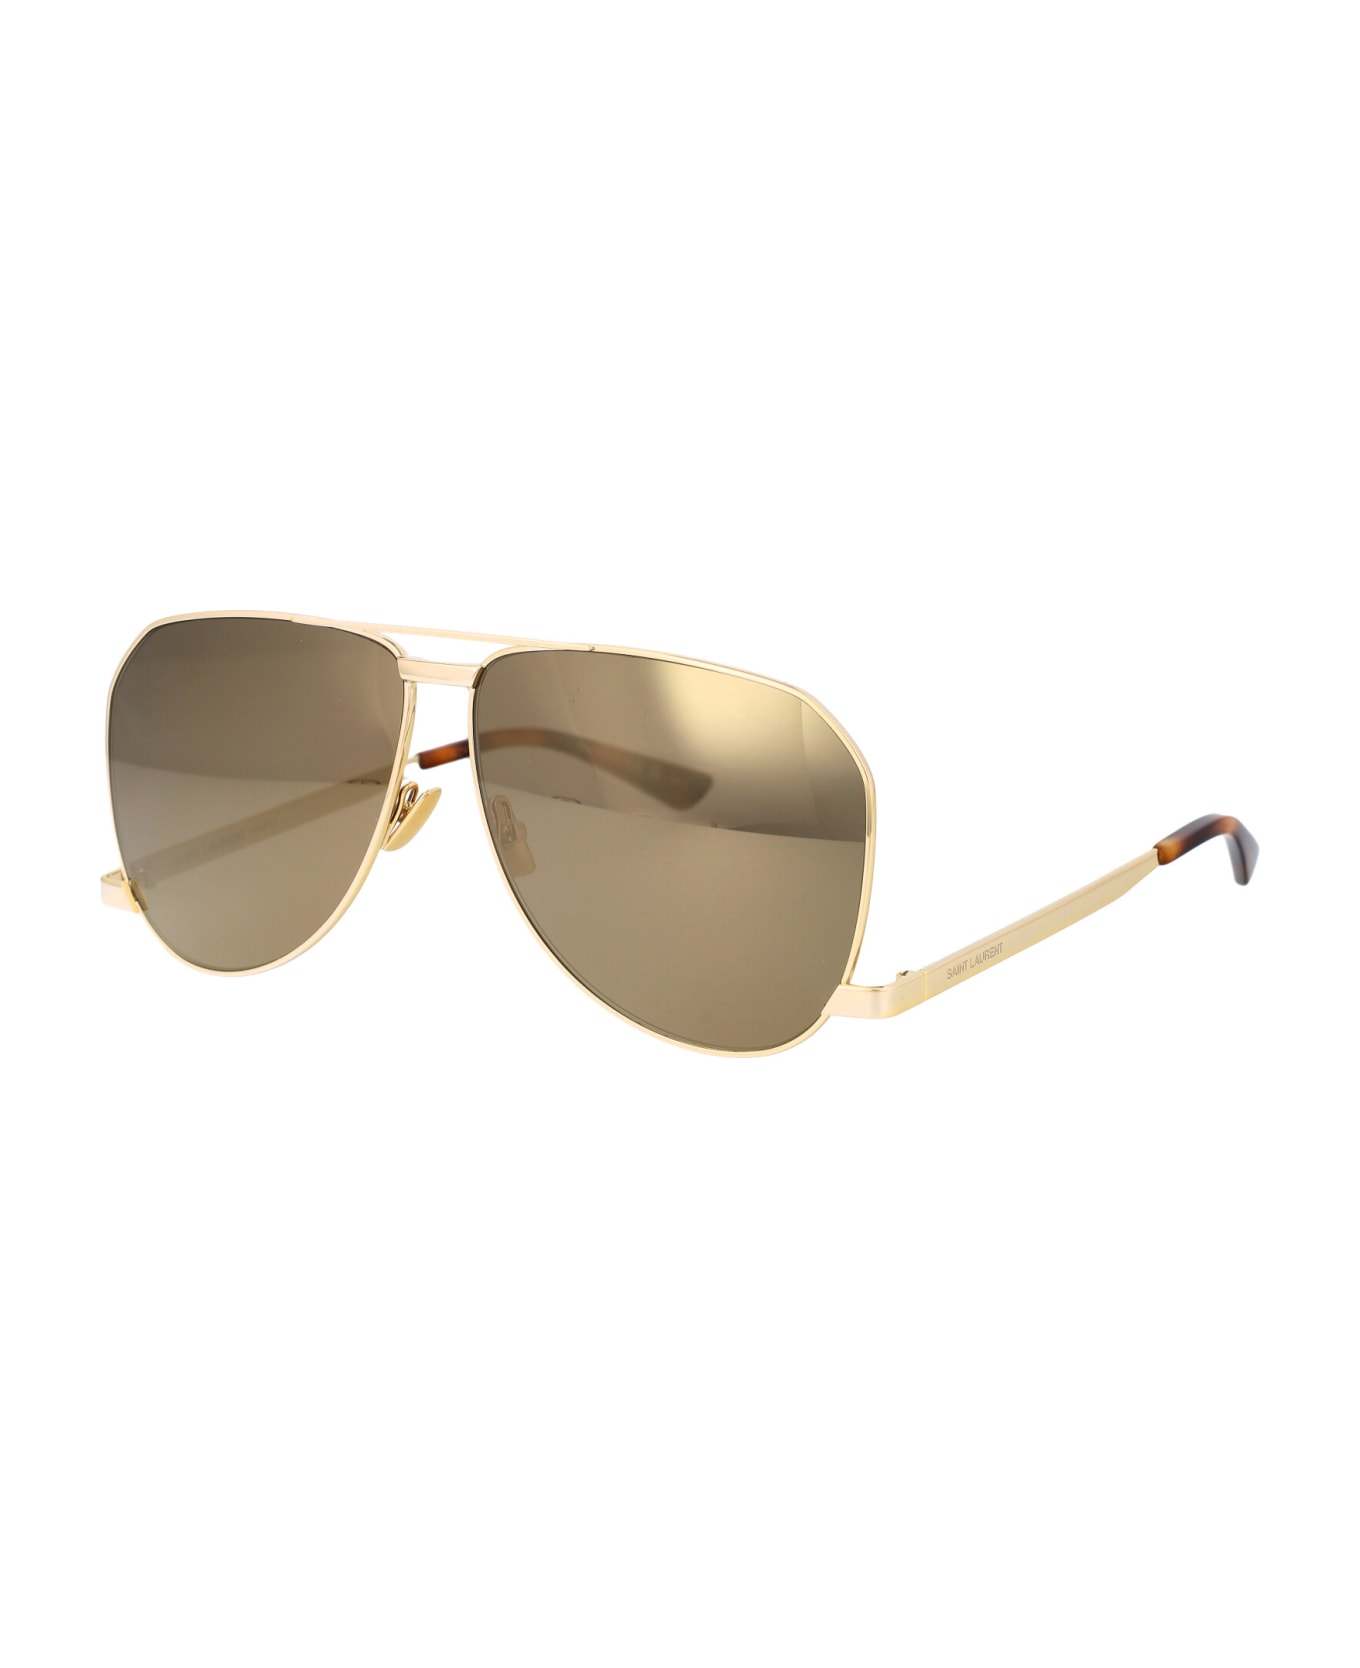 Saint Laurent Eyewear Sl 690 Dust Sunglasses - 004 GOLD GOLD BROWN